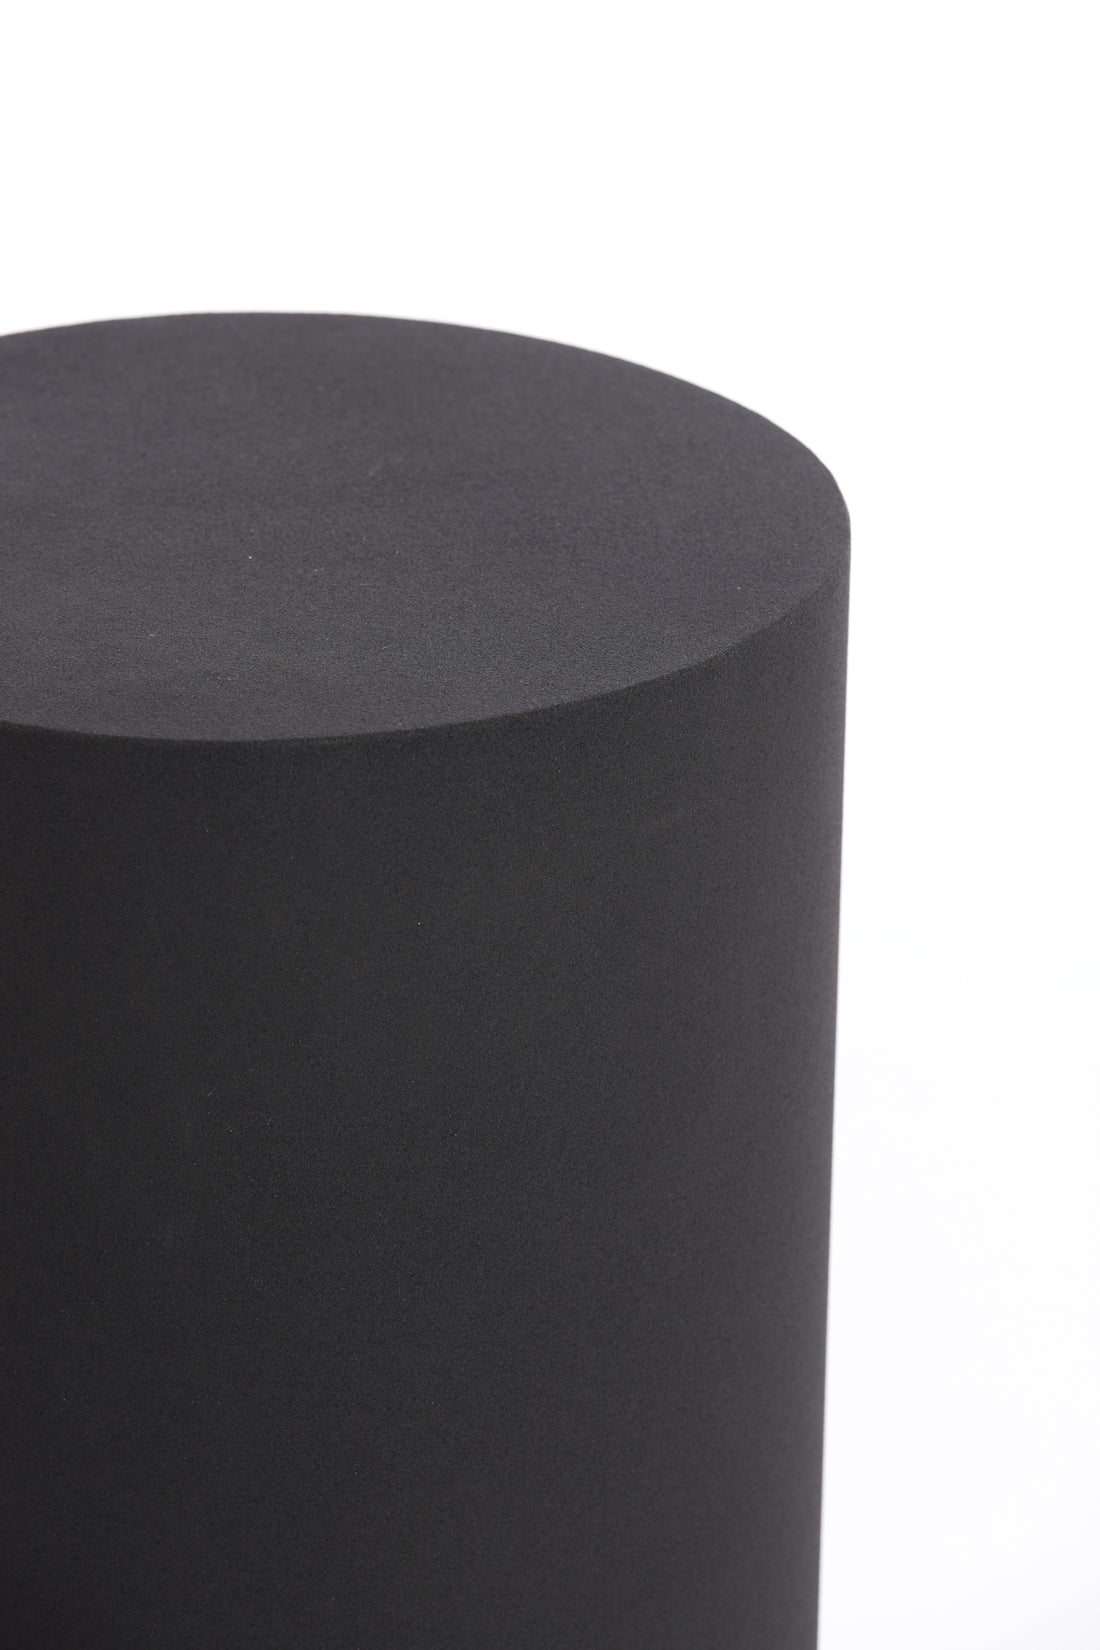 Column ALARIOS matt black Ø30x60cm